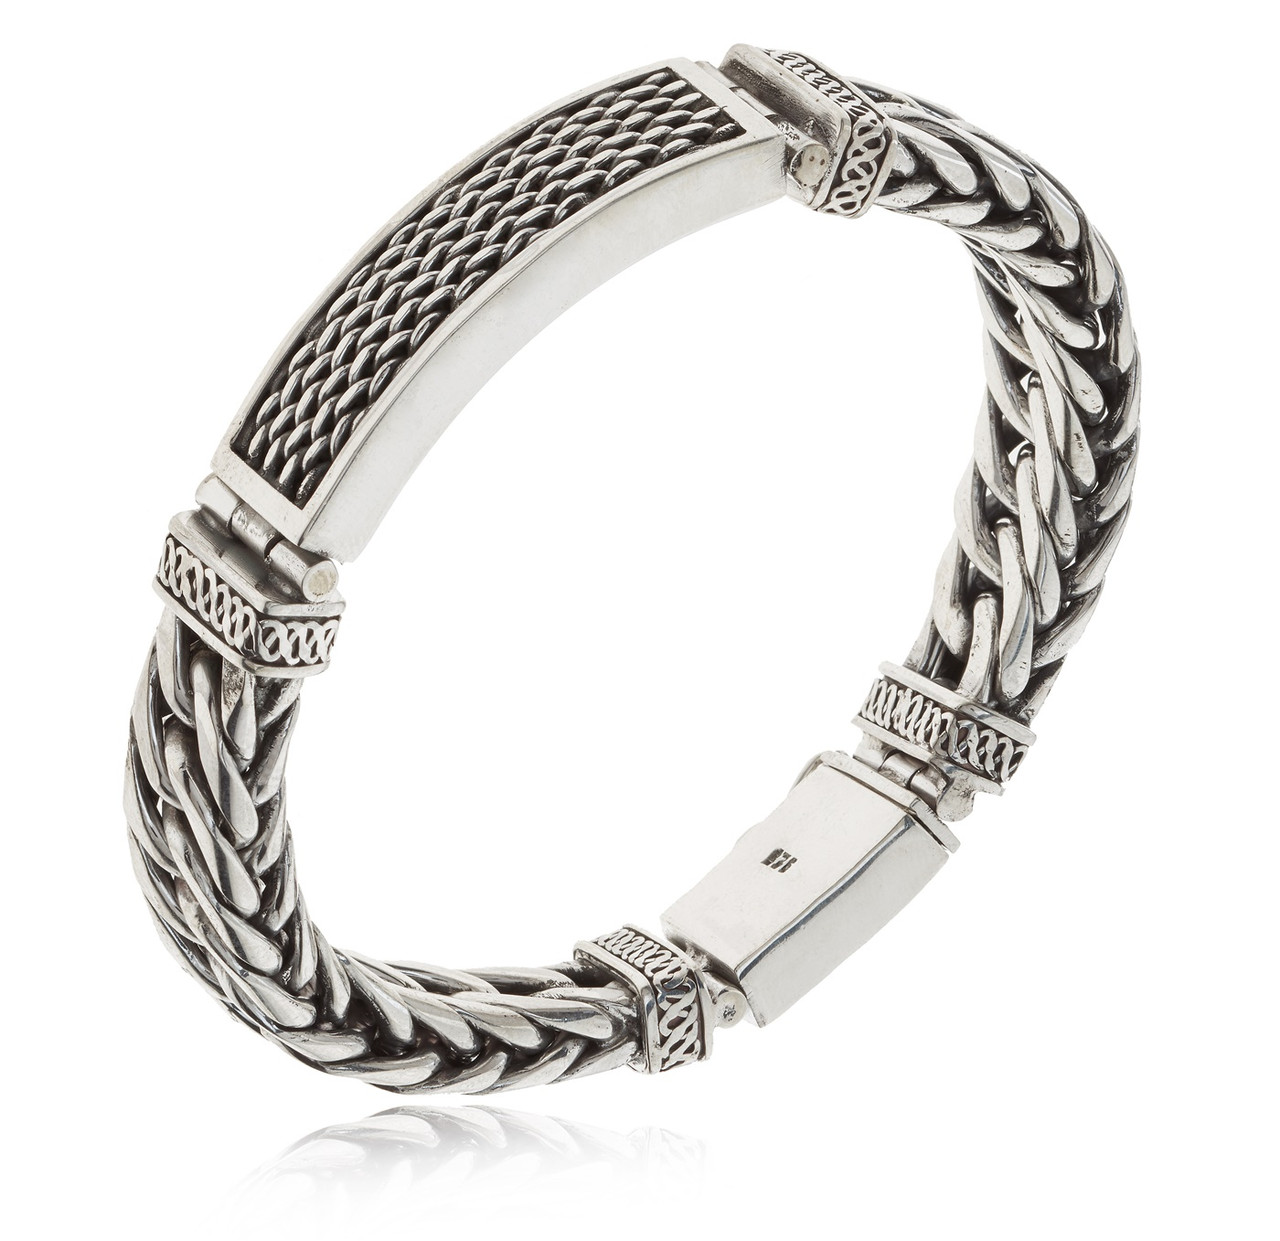 CLARA ANTI-TARNISH 92.5 STERLING SILVER BRACELET 8 INCH 15 GM GIFT FOR MEN  & BOYS - Minar Fashion Jewellery